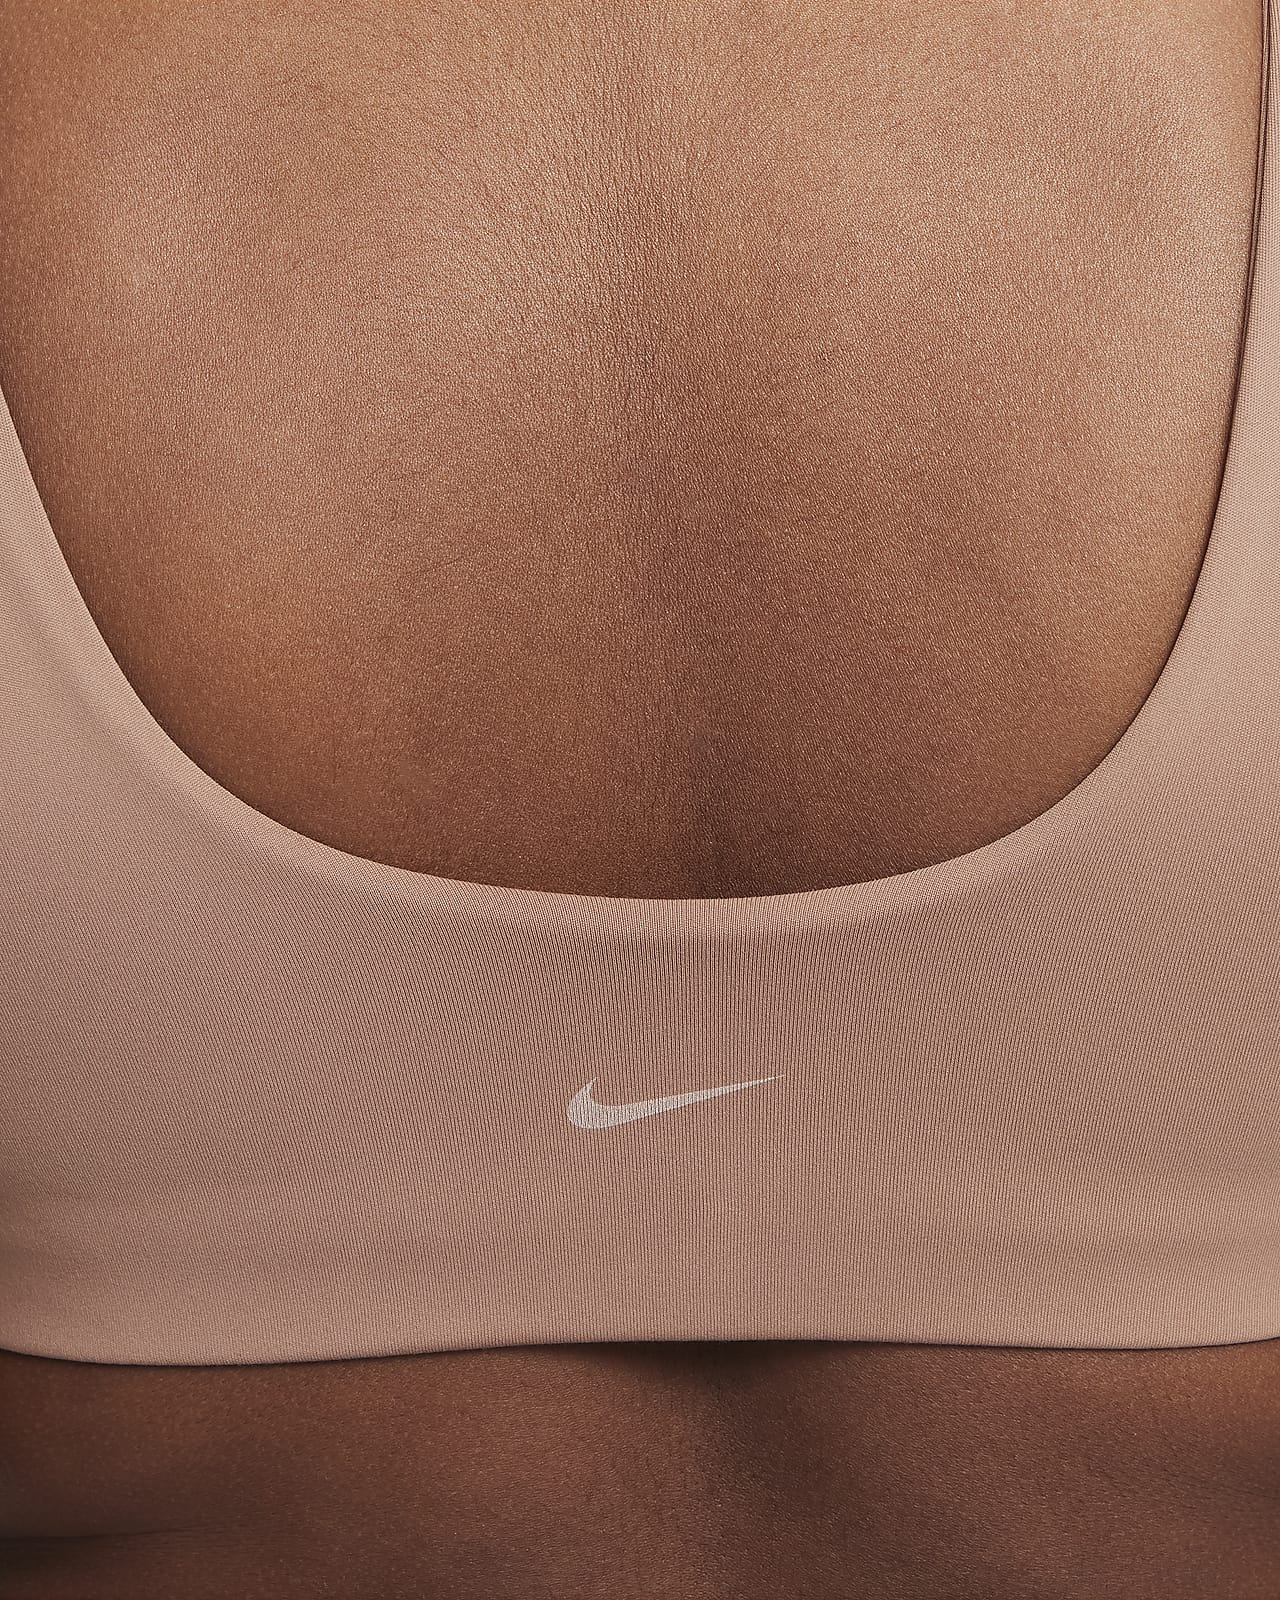 Nike Older Girls Dri-fit Alate All U Sports Bra - White/Black